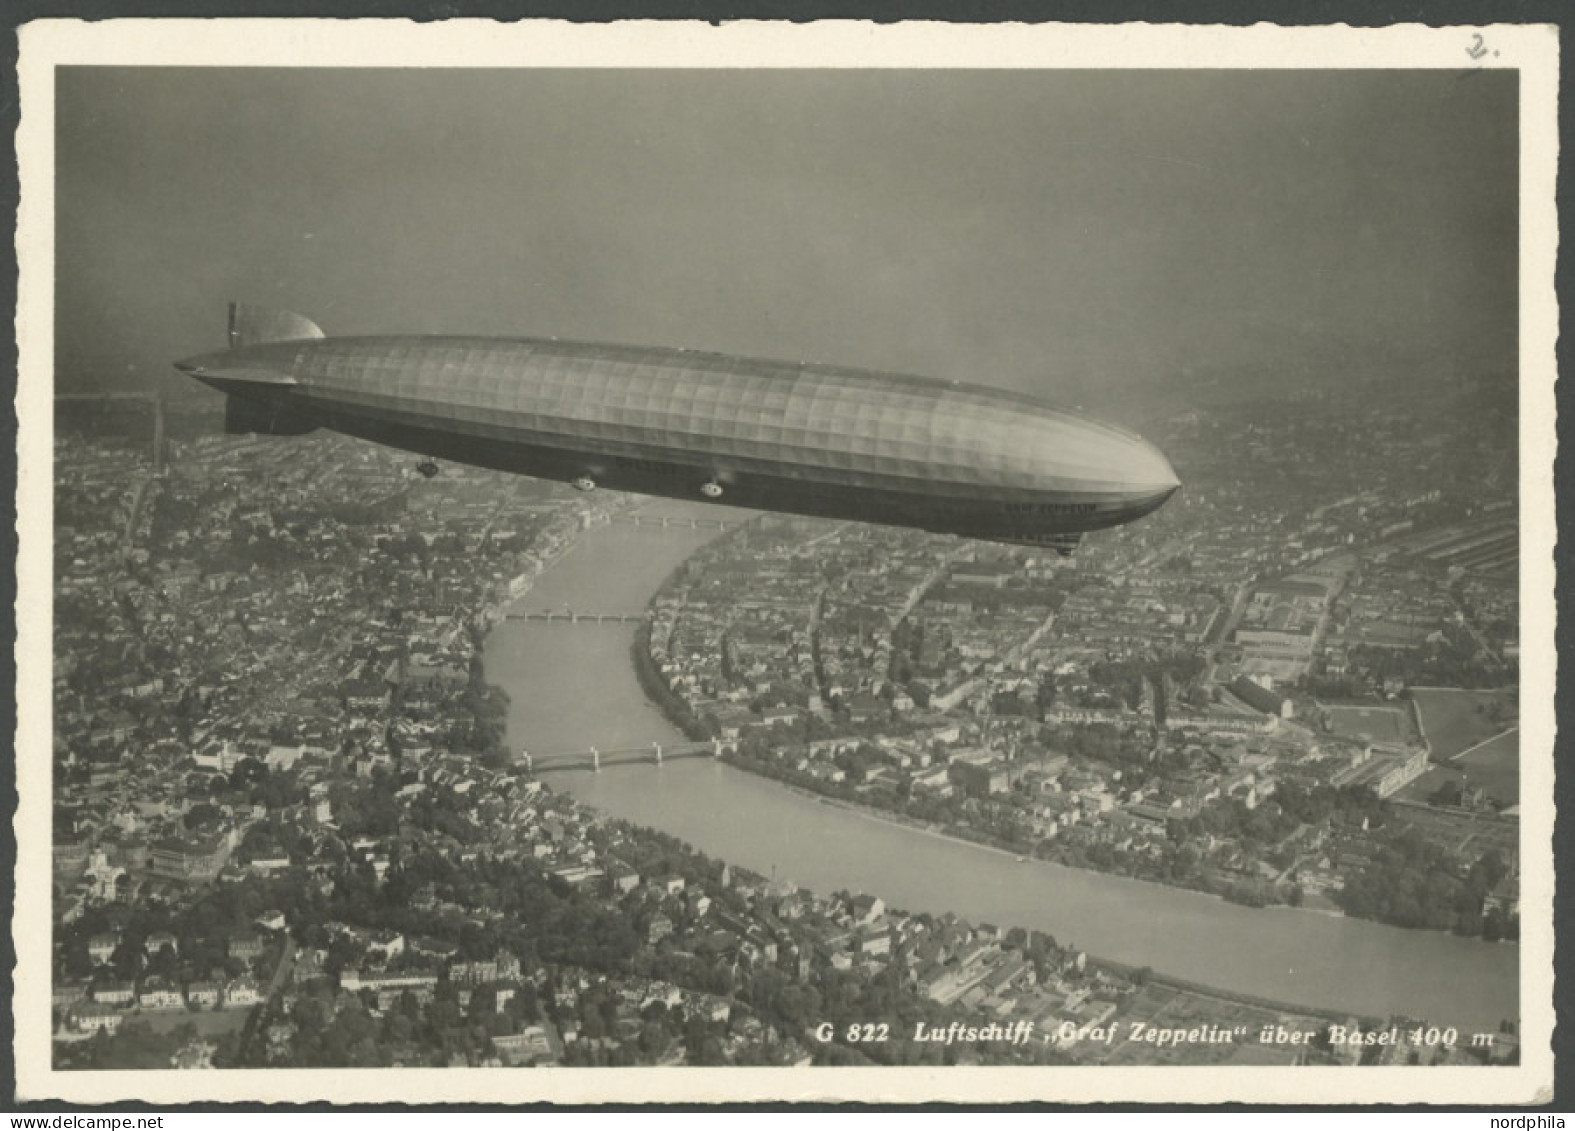 LUFTPOST SF 32.10 BRIEF, 25.9.1932, Ballonpost GORDON BENNETT WETTFAHRT, Basel-Ebrach, Mit Vignette, Karte Feinst - First Flight Covers